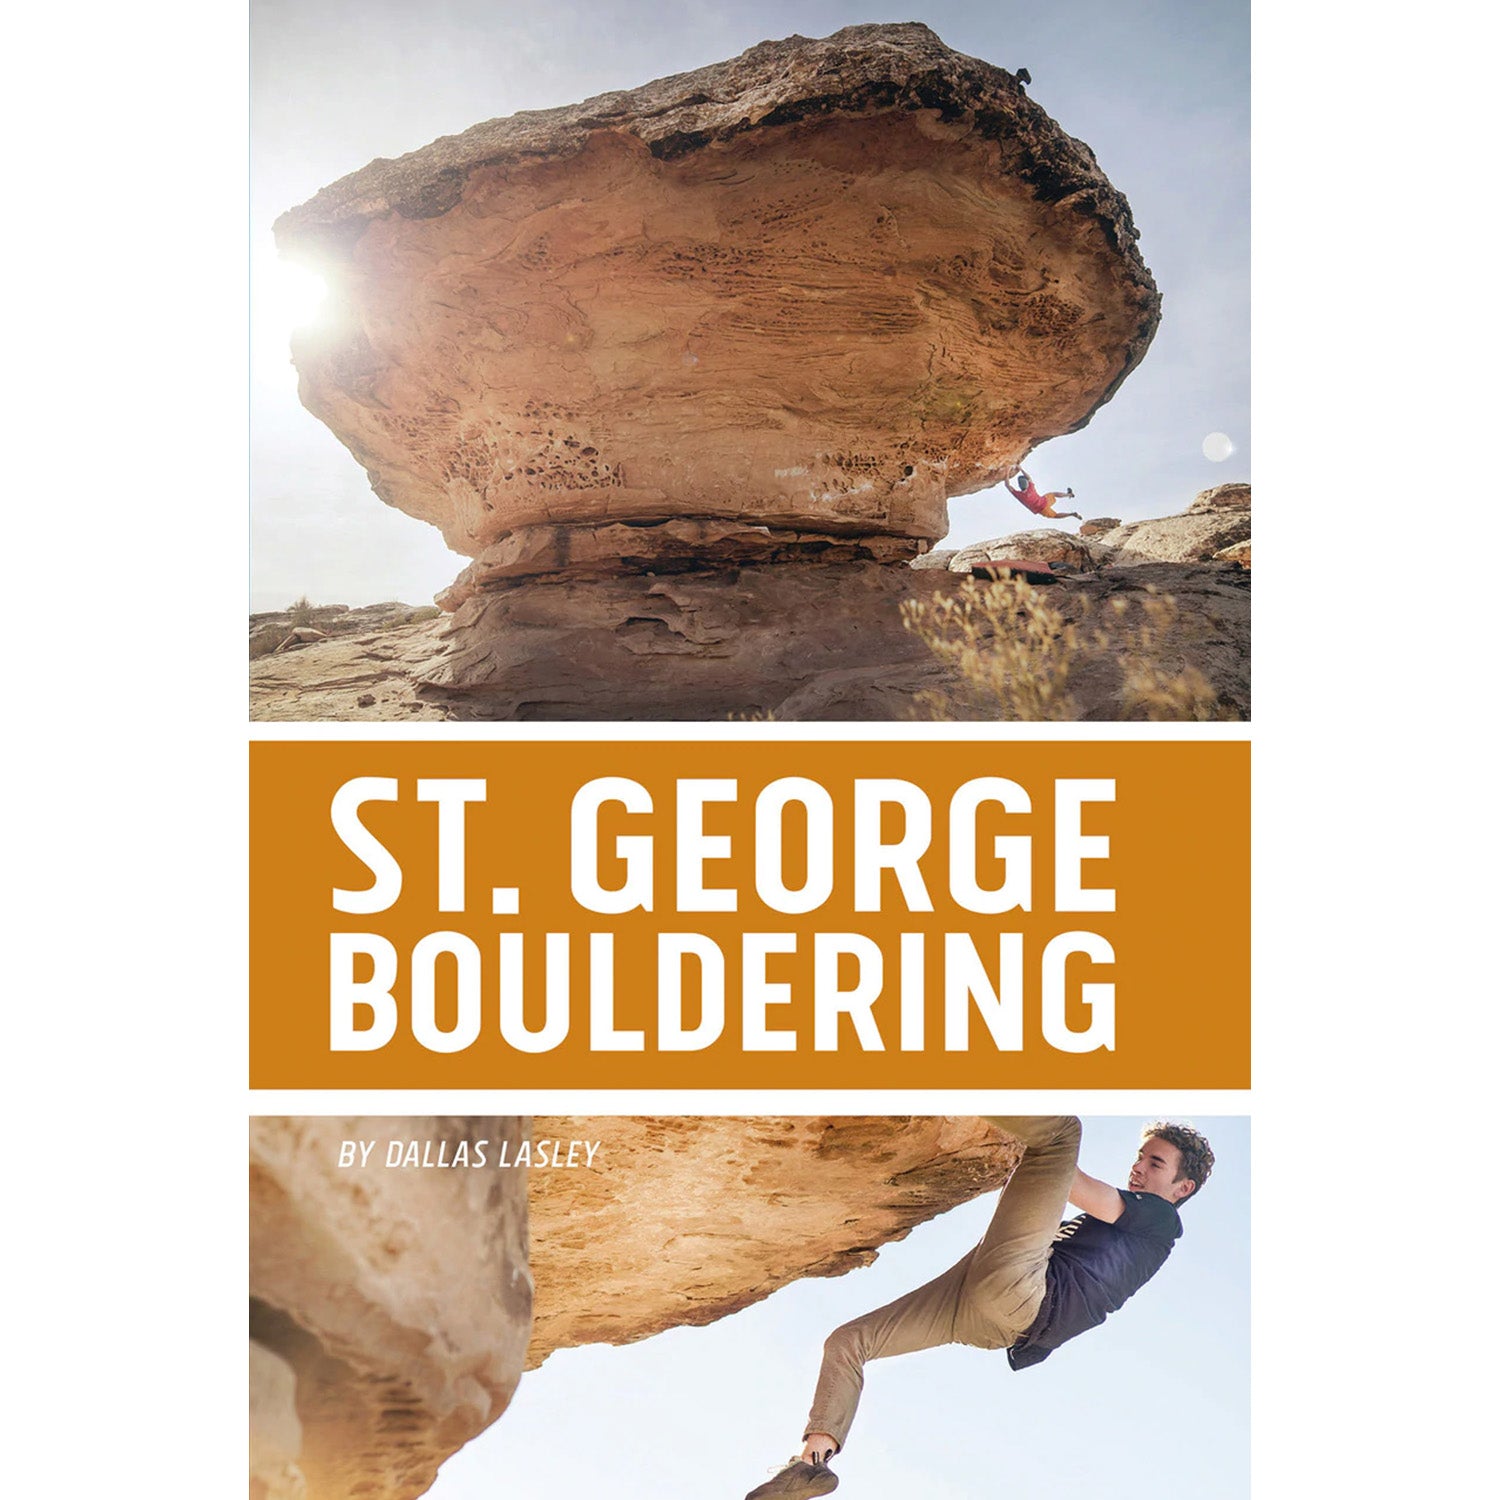 St. George Bouldering